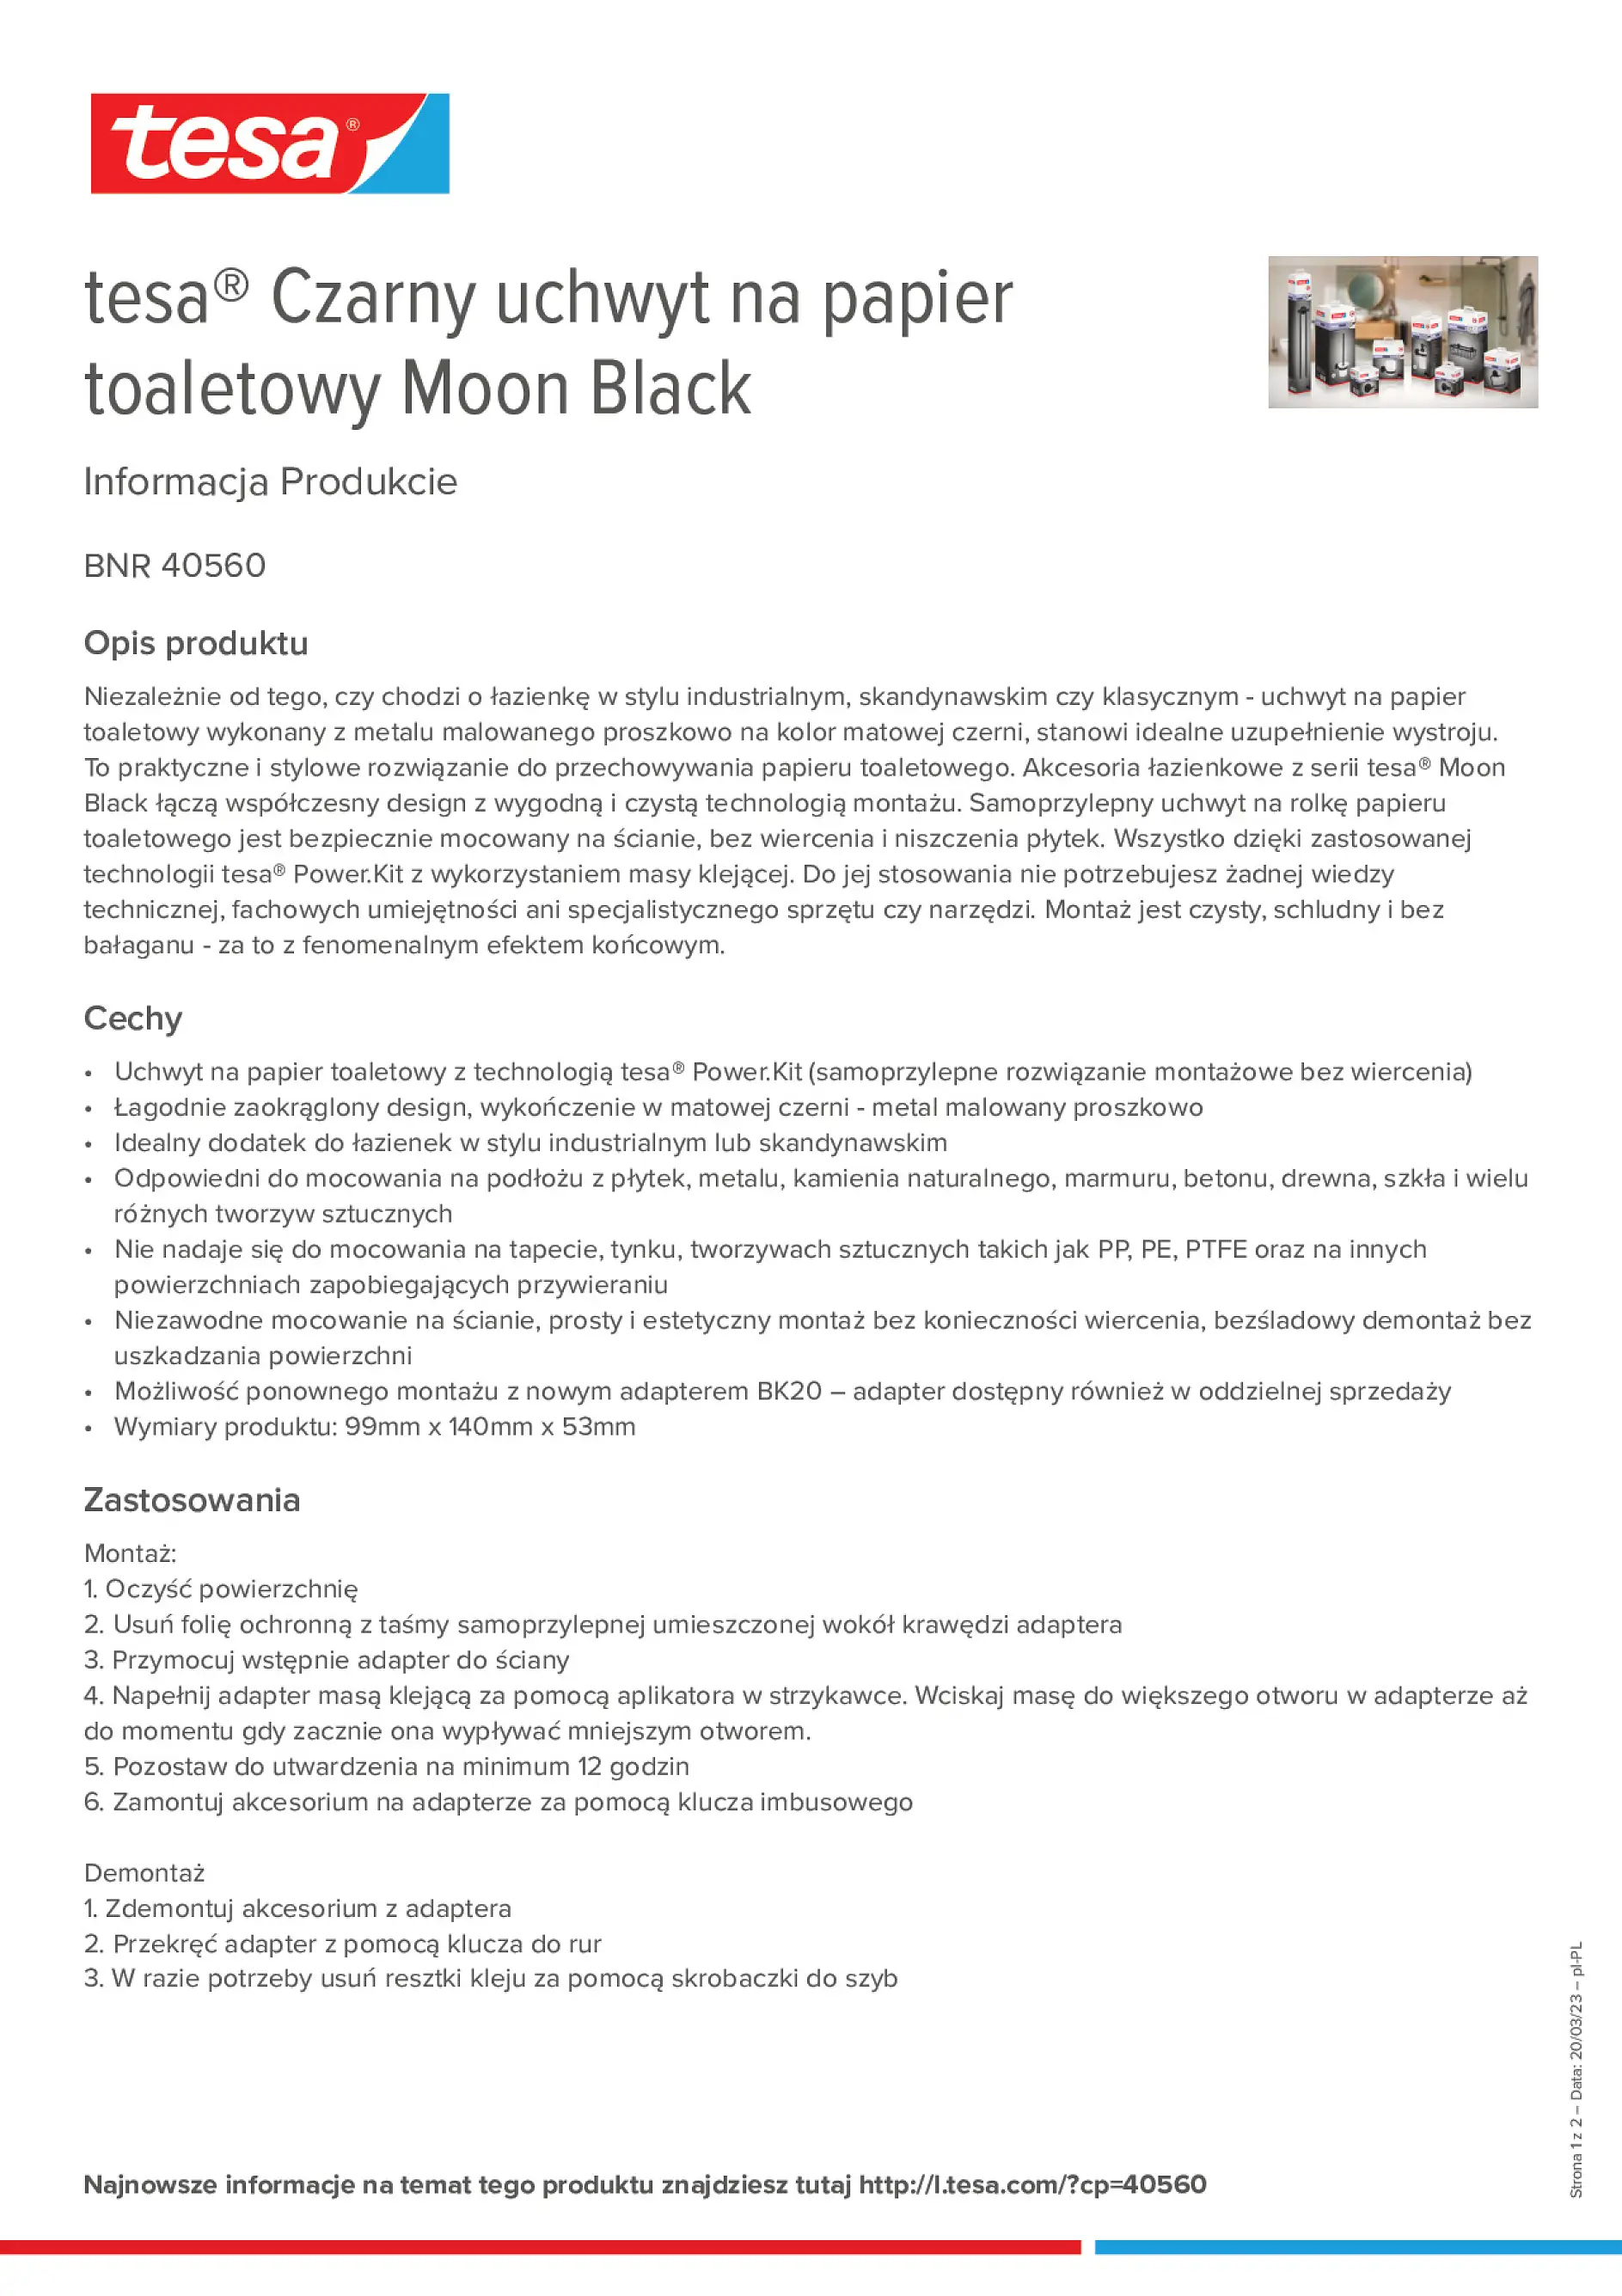 tesa-Moon-Black-Toilet-Roll-Holder-40560_copiw_pl-PL